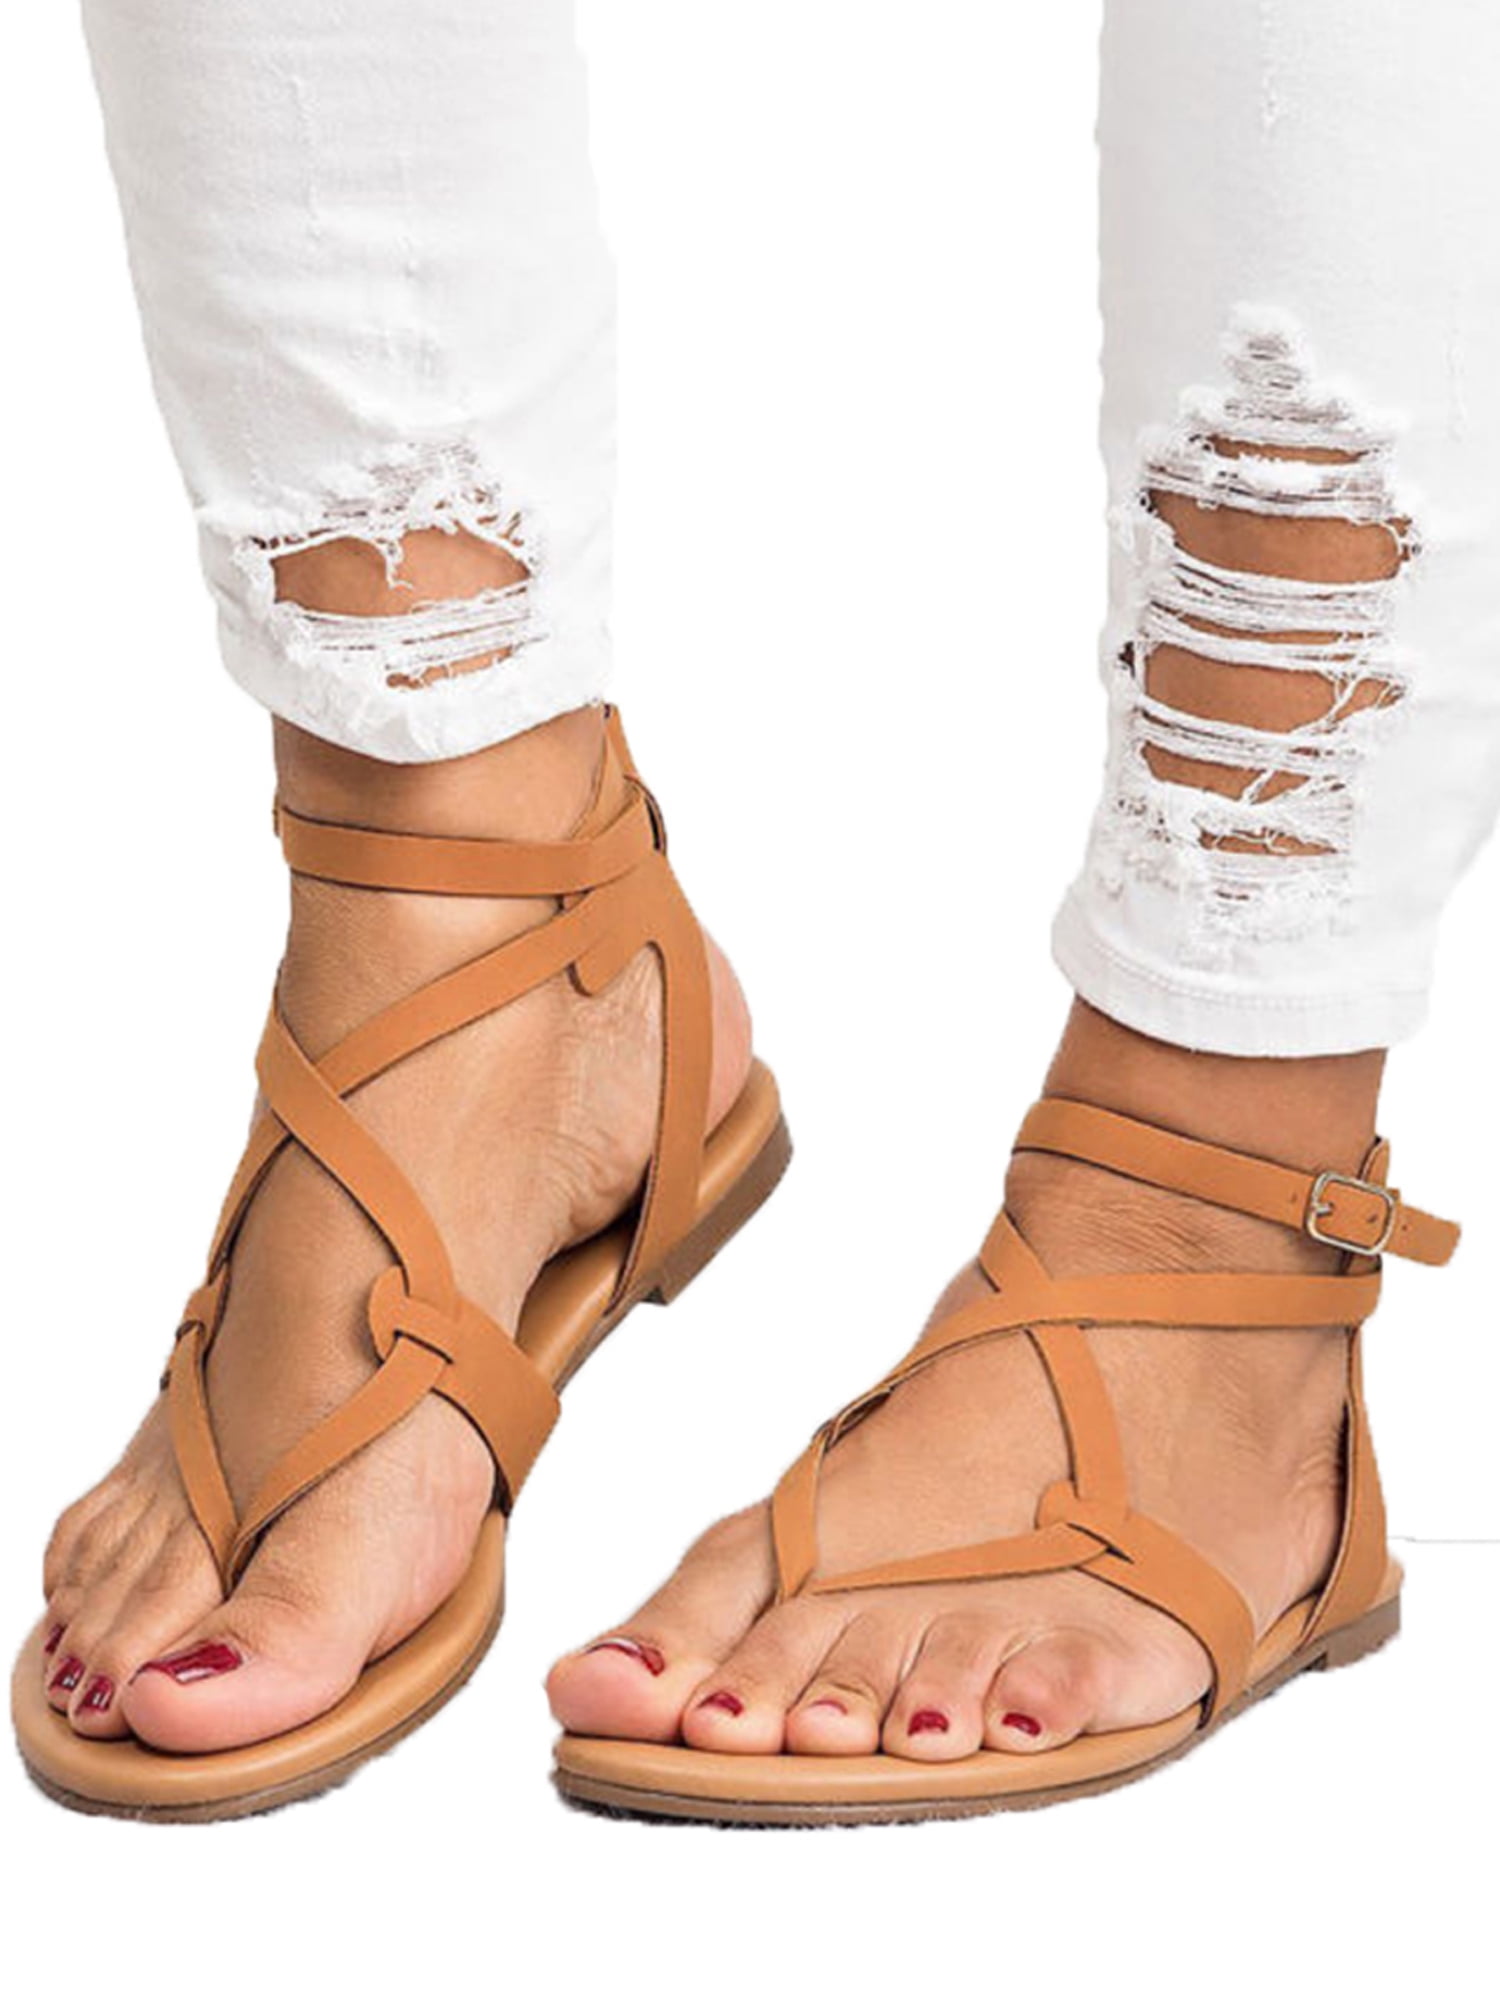 Women Sandals Ruffles Flat Sandals Lace Up Ladies Gladiator Sandals Summer Shoes Sandalia,Pink,43 